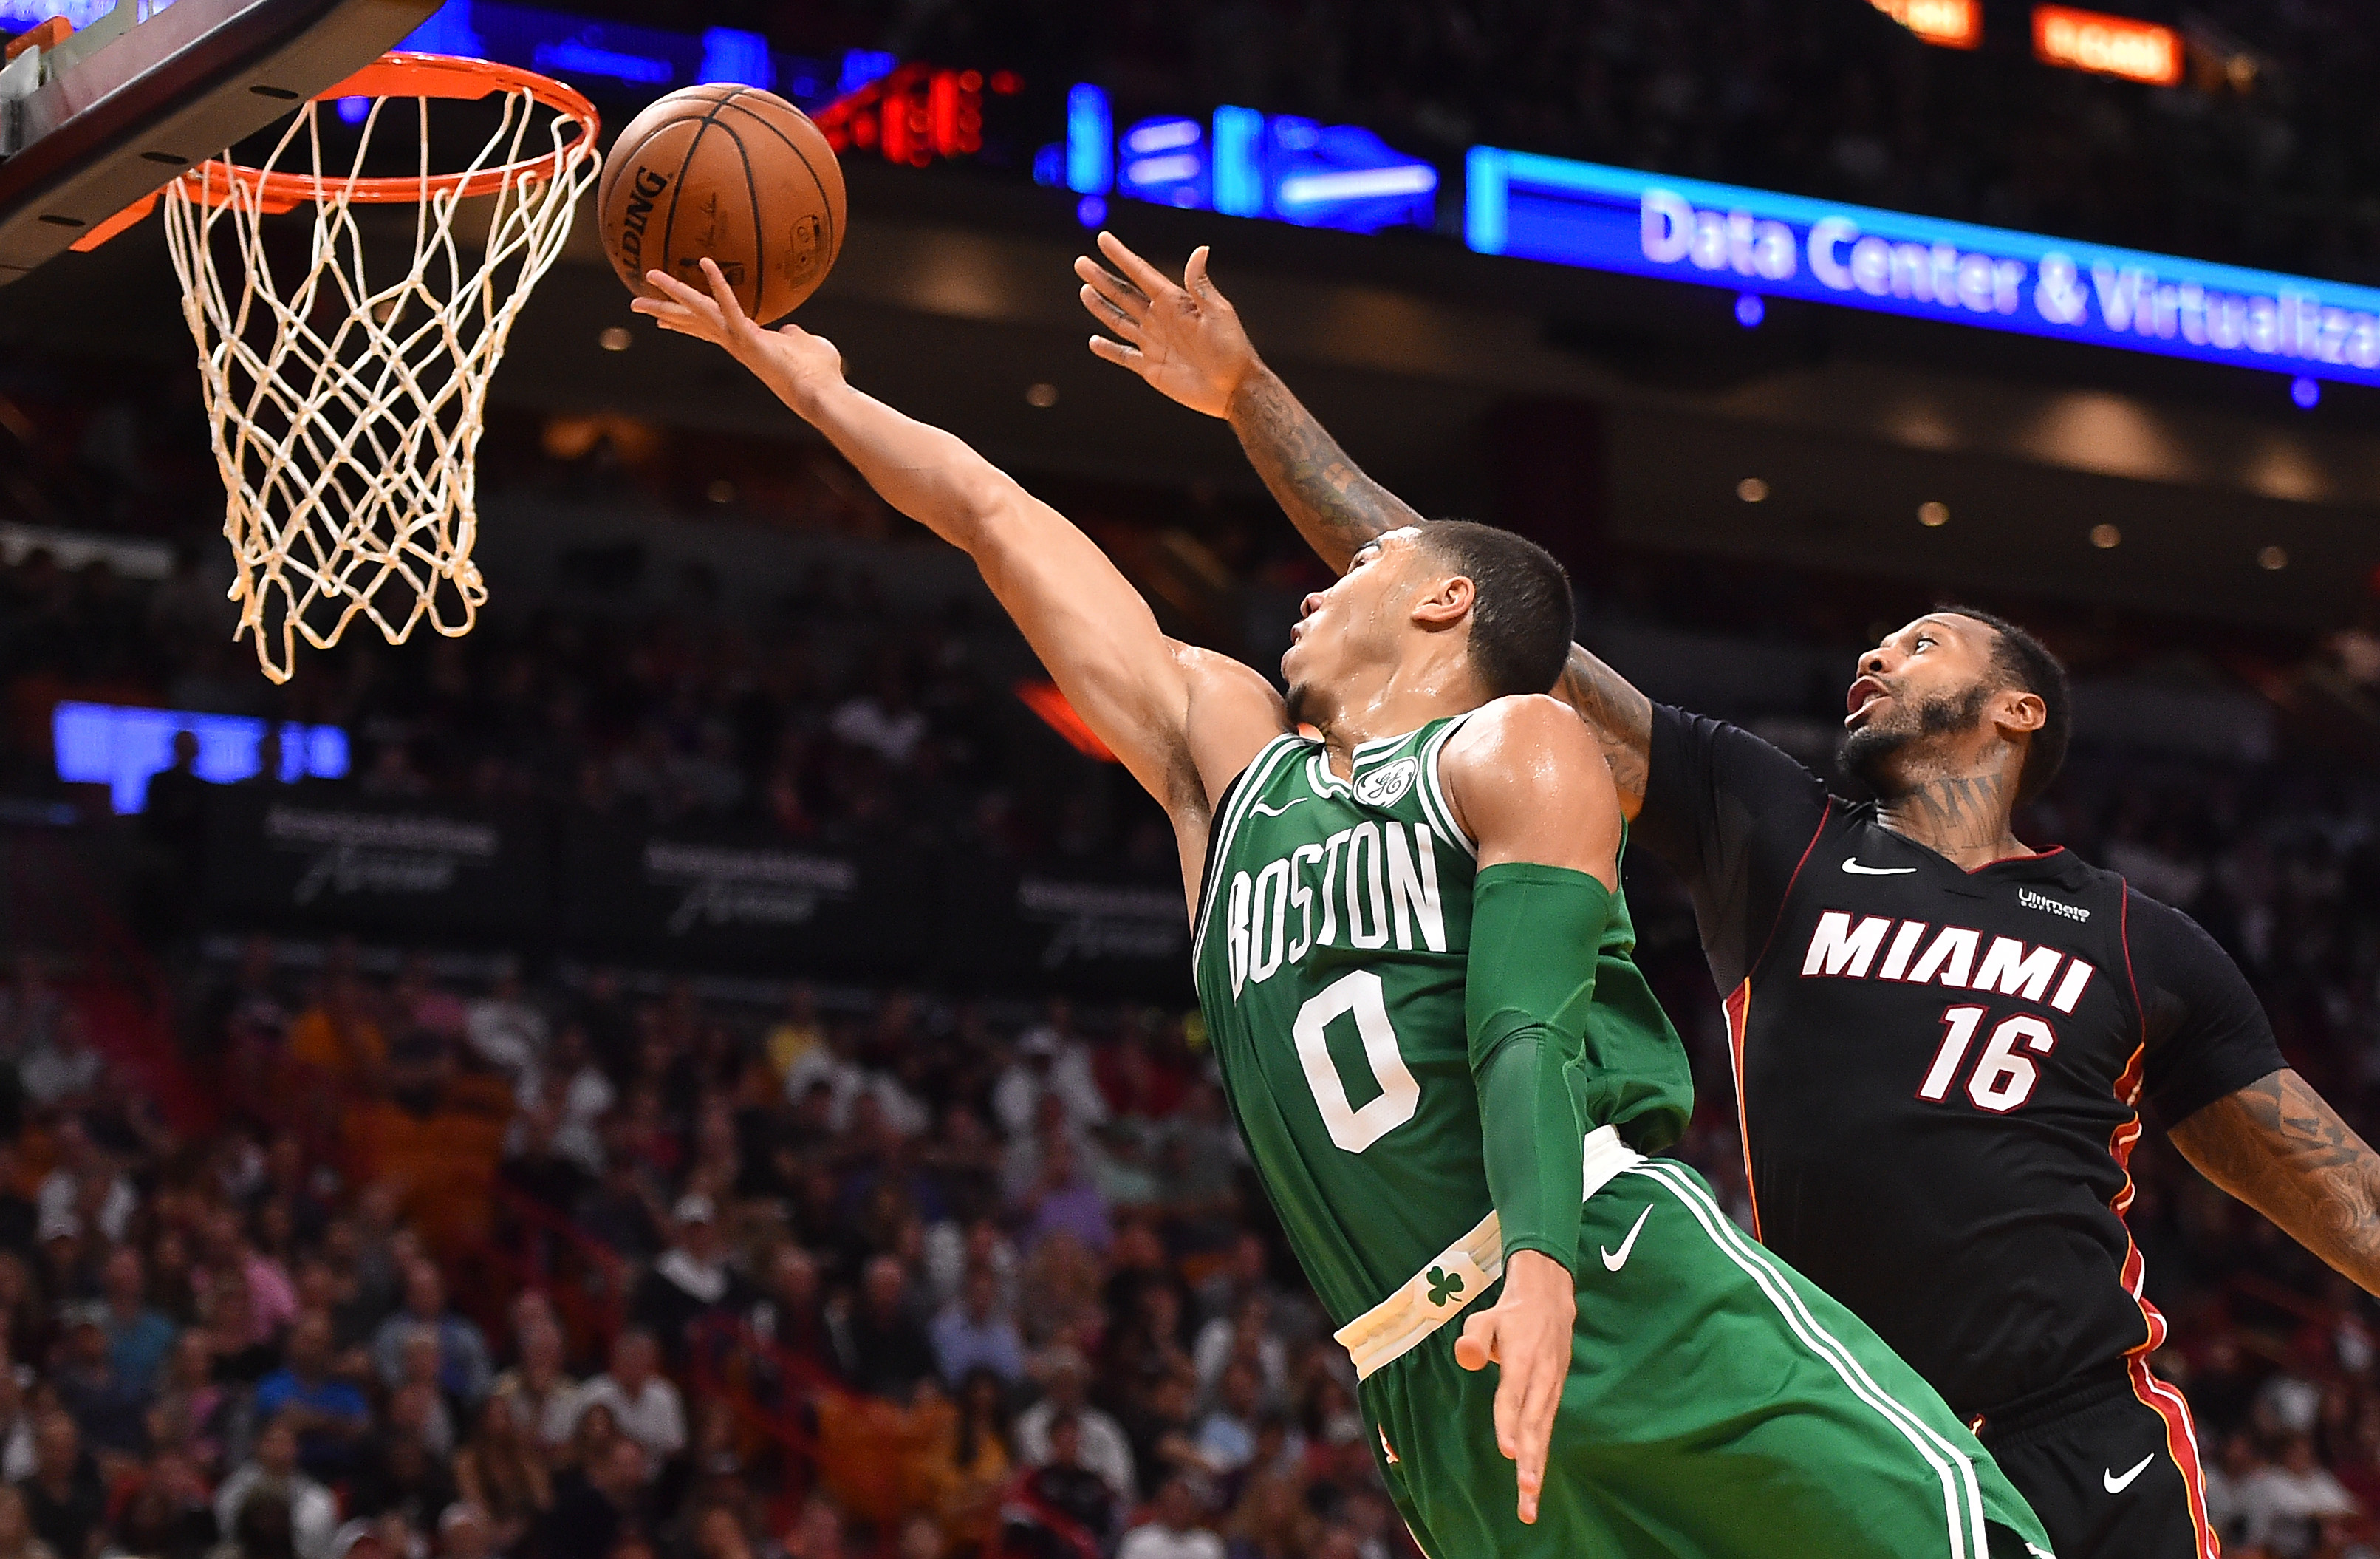 NBA - Jayson Tatum and Donovan Mitchell stuffed the stat